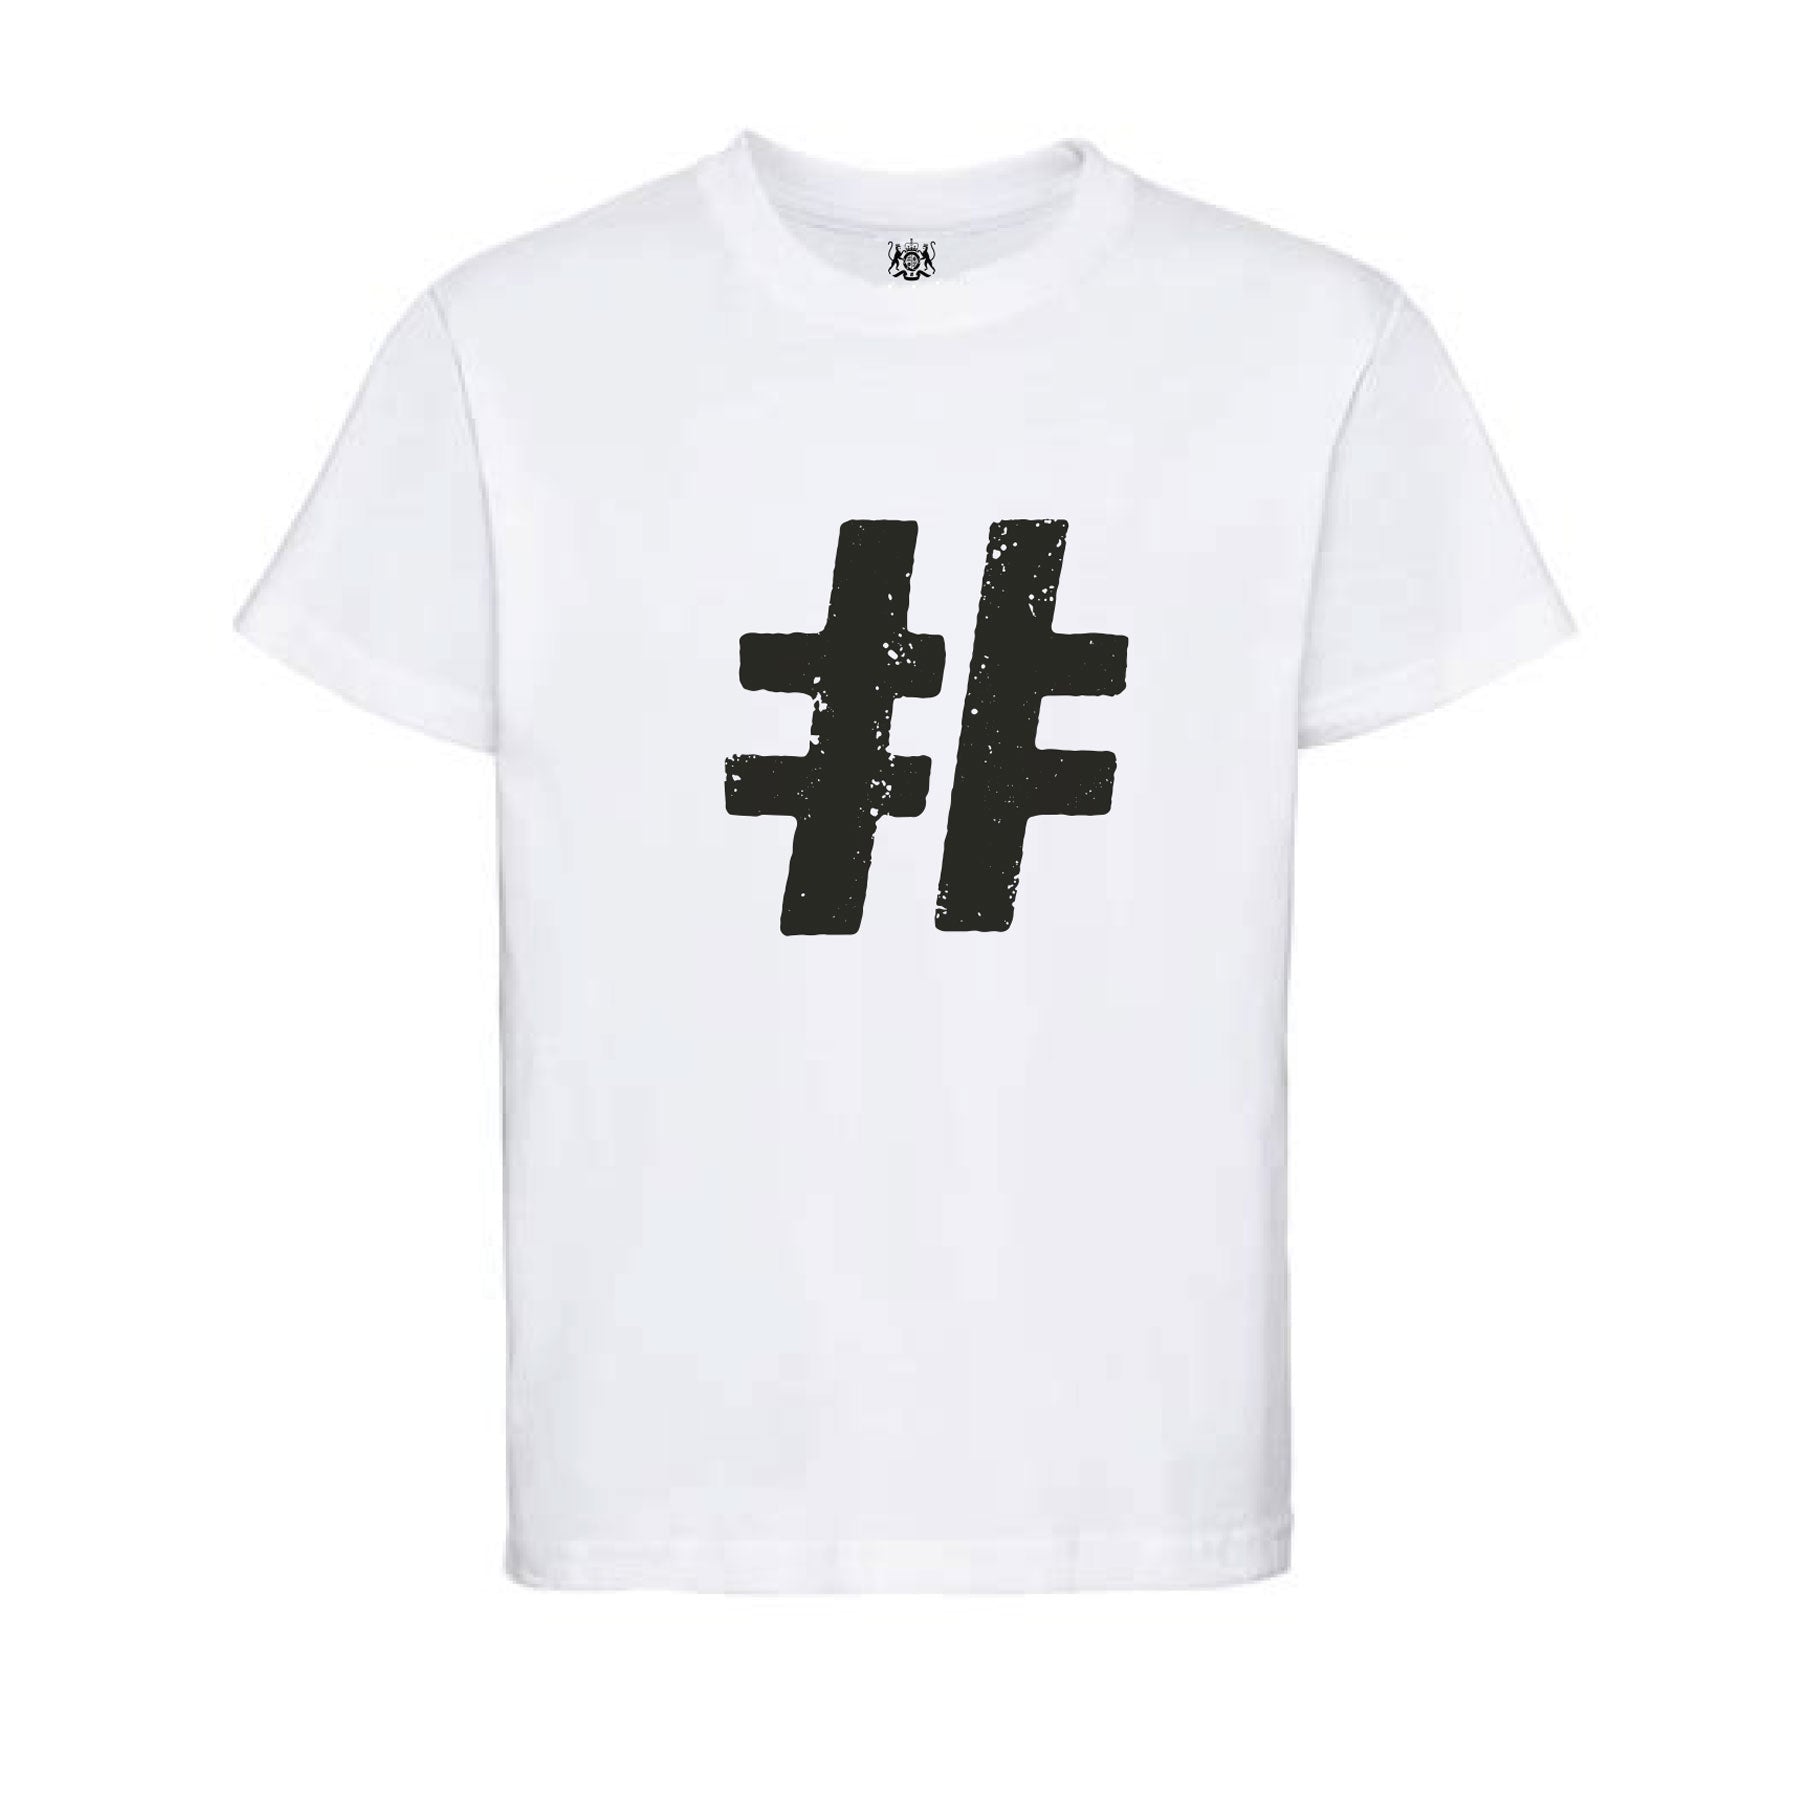 Happy Propaganda T-Shirt in white with black hashtag